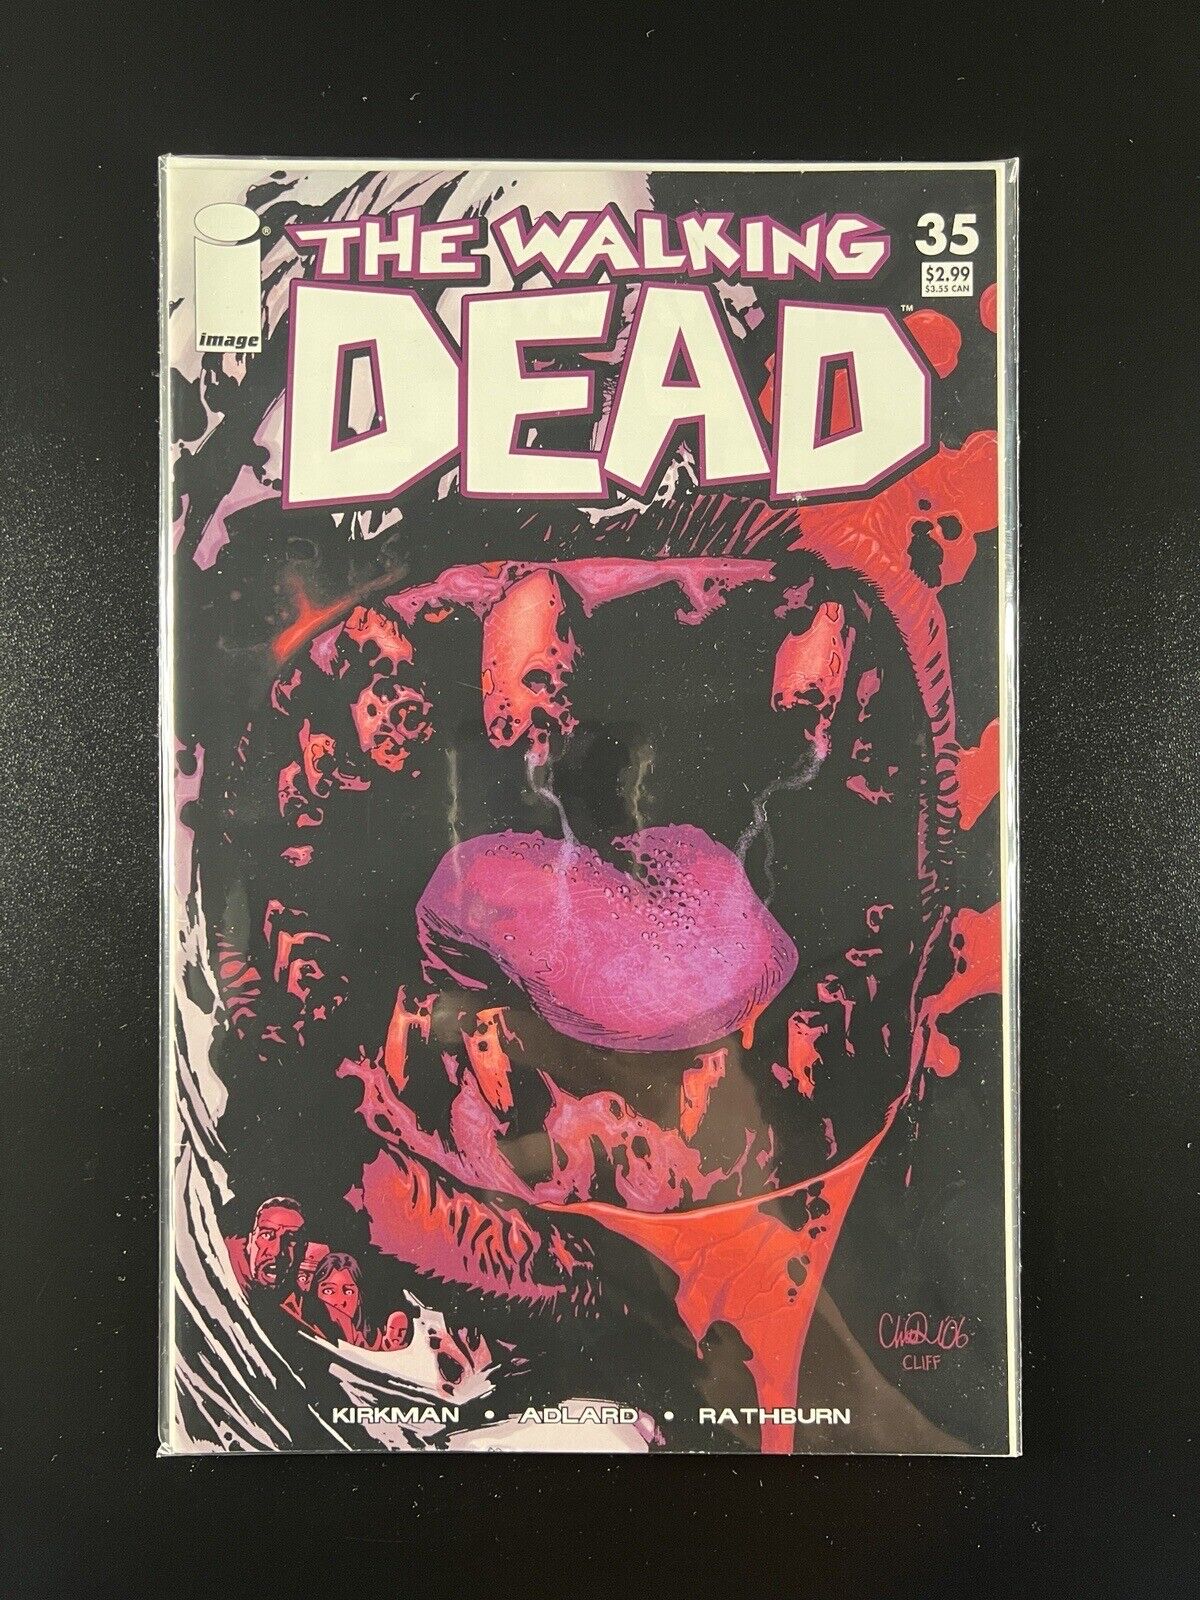 The Walking Dead #35 | Kirkman Adlard | Image 2007